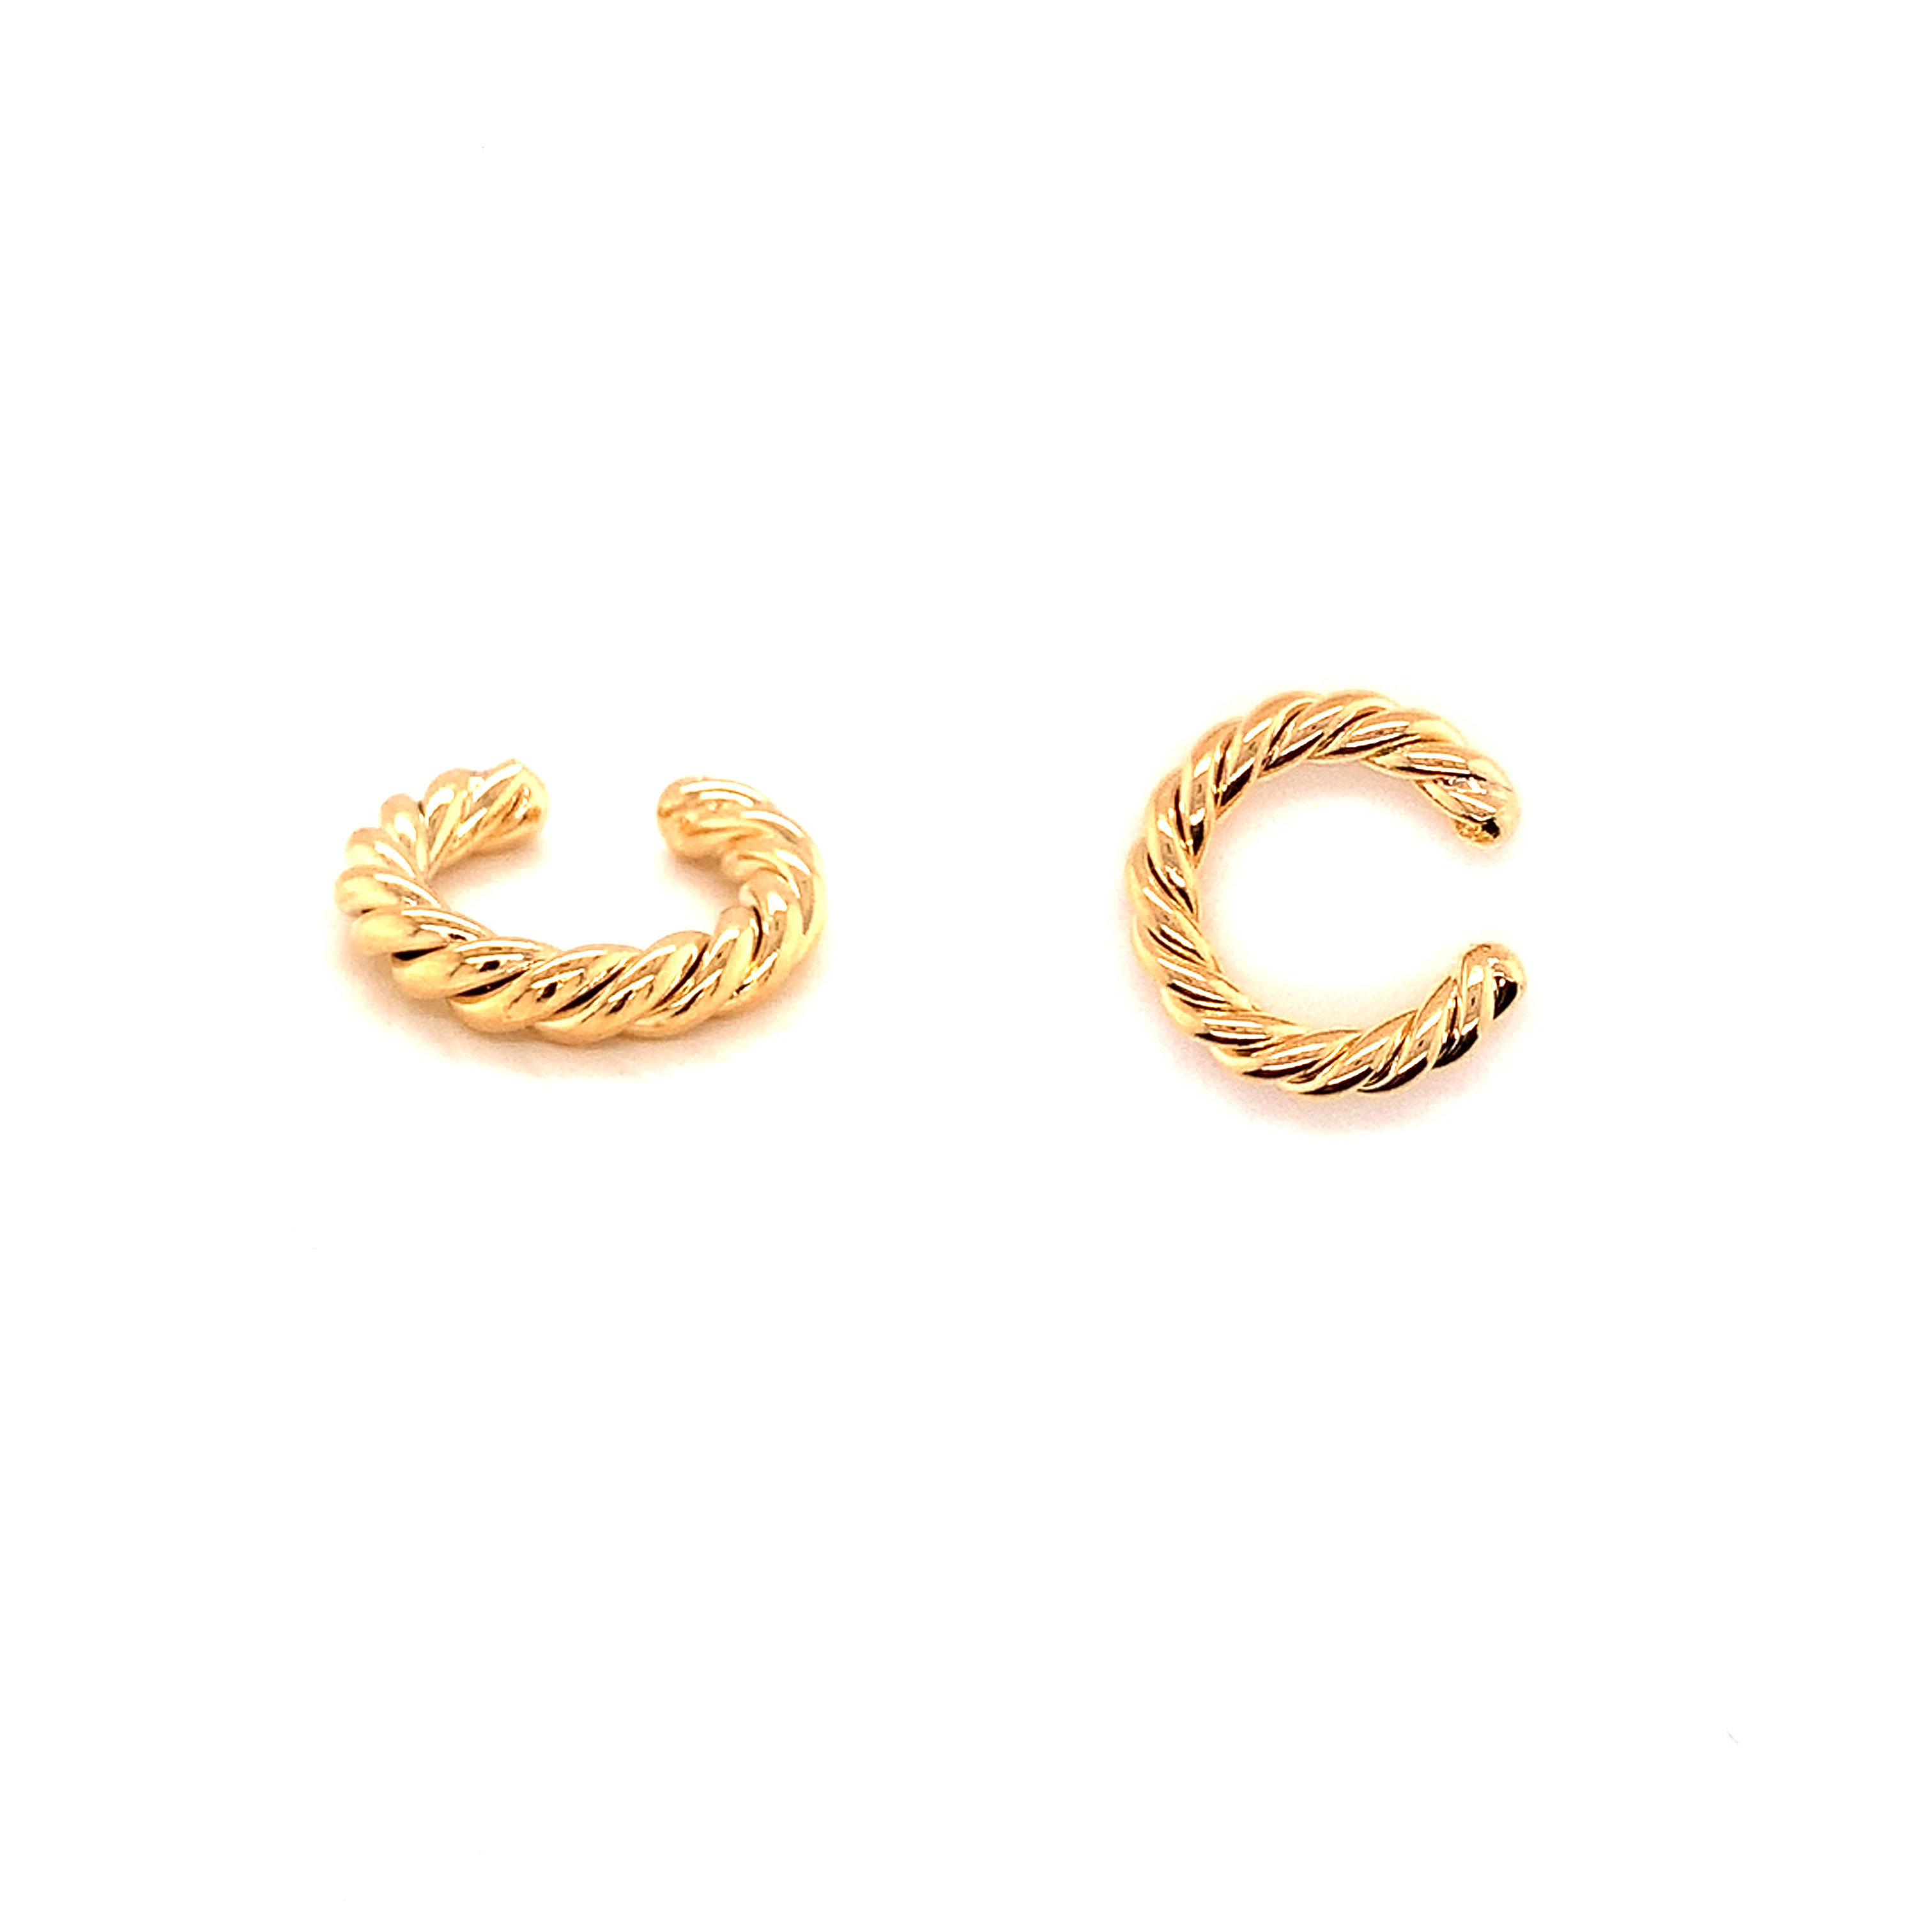 Roped Ear Cuff - Price per piece - Gold Filled